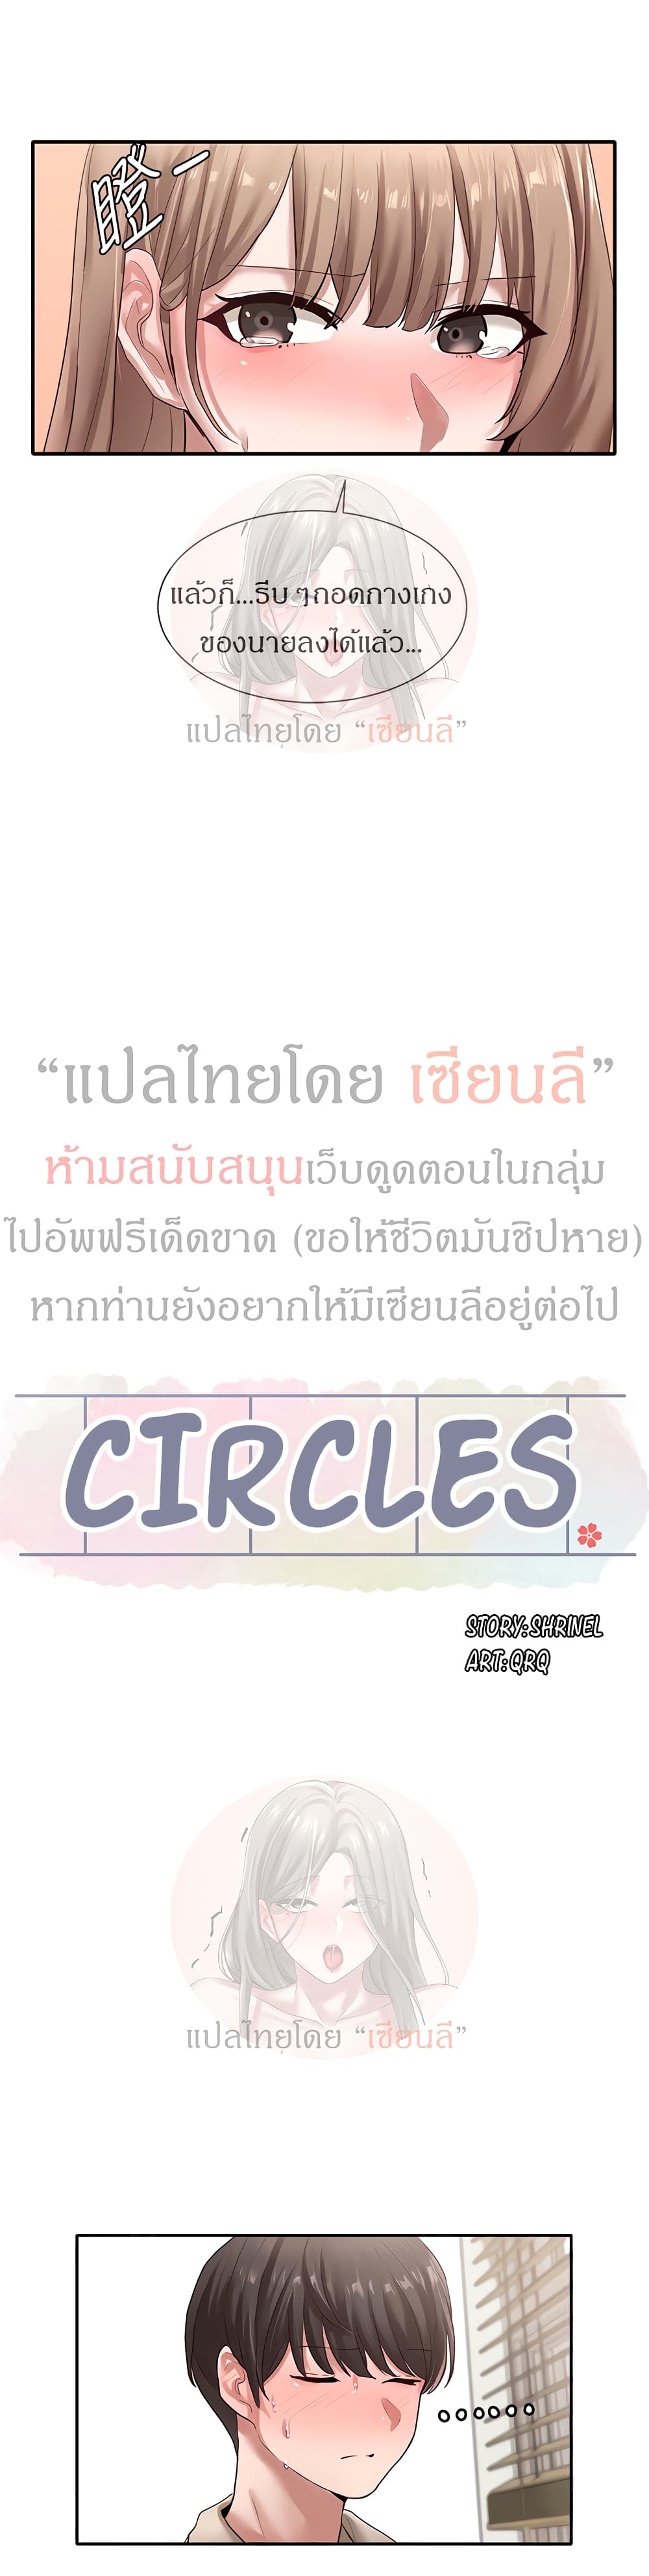 Theater Society (Circles) 34 (21)